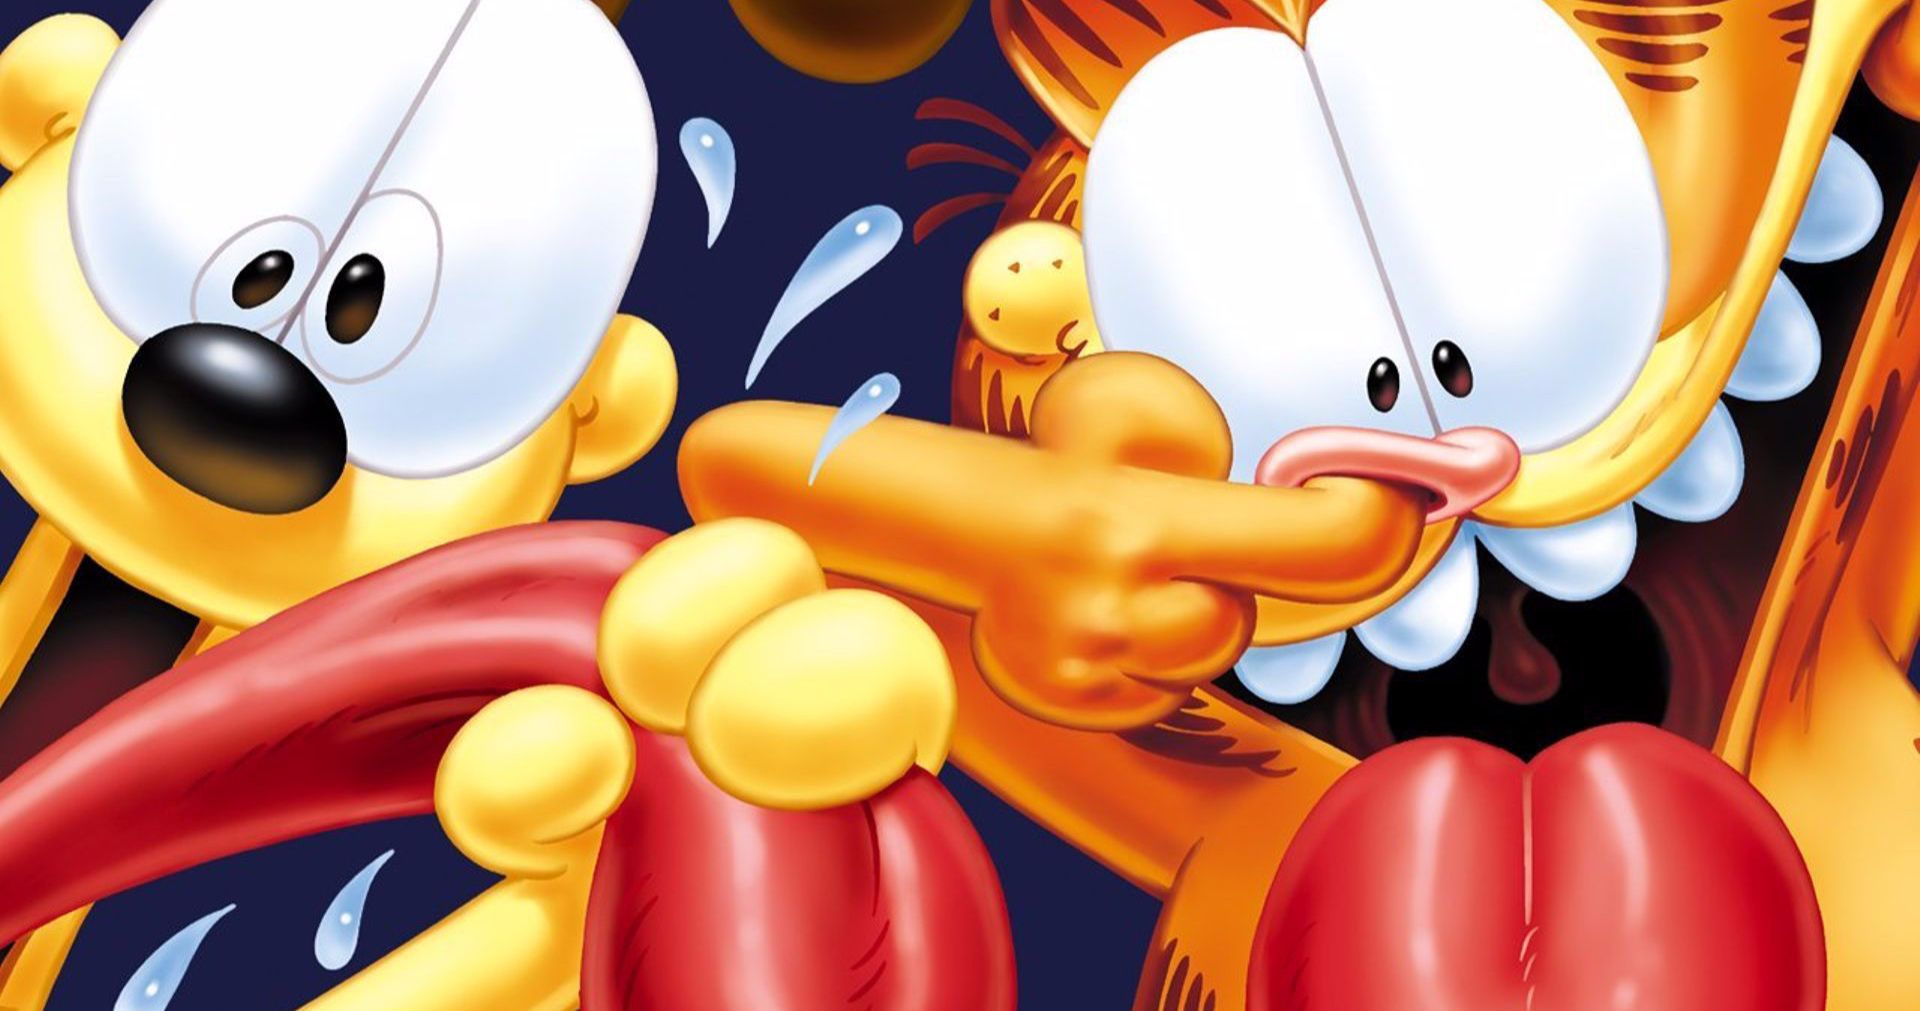 New Garfield Animated Series Is Coming to Nickelodeon